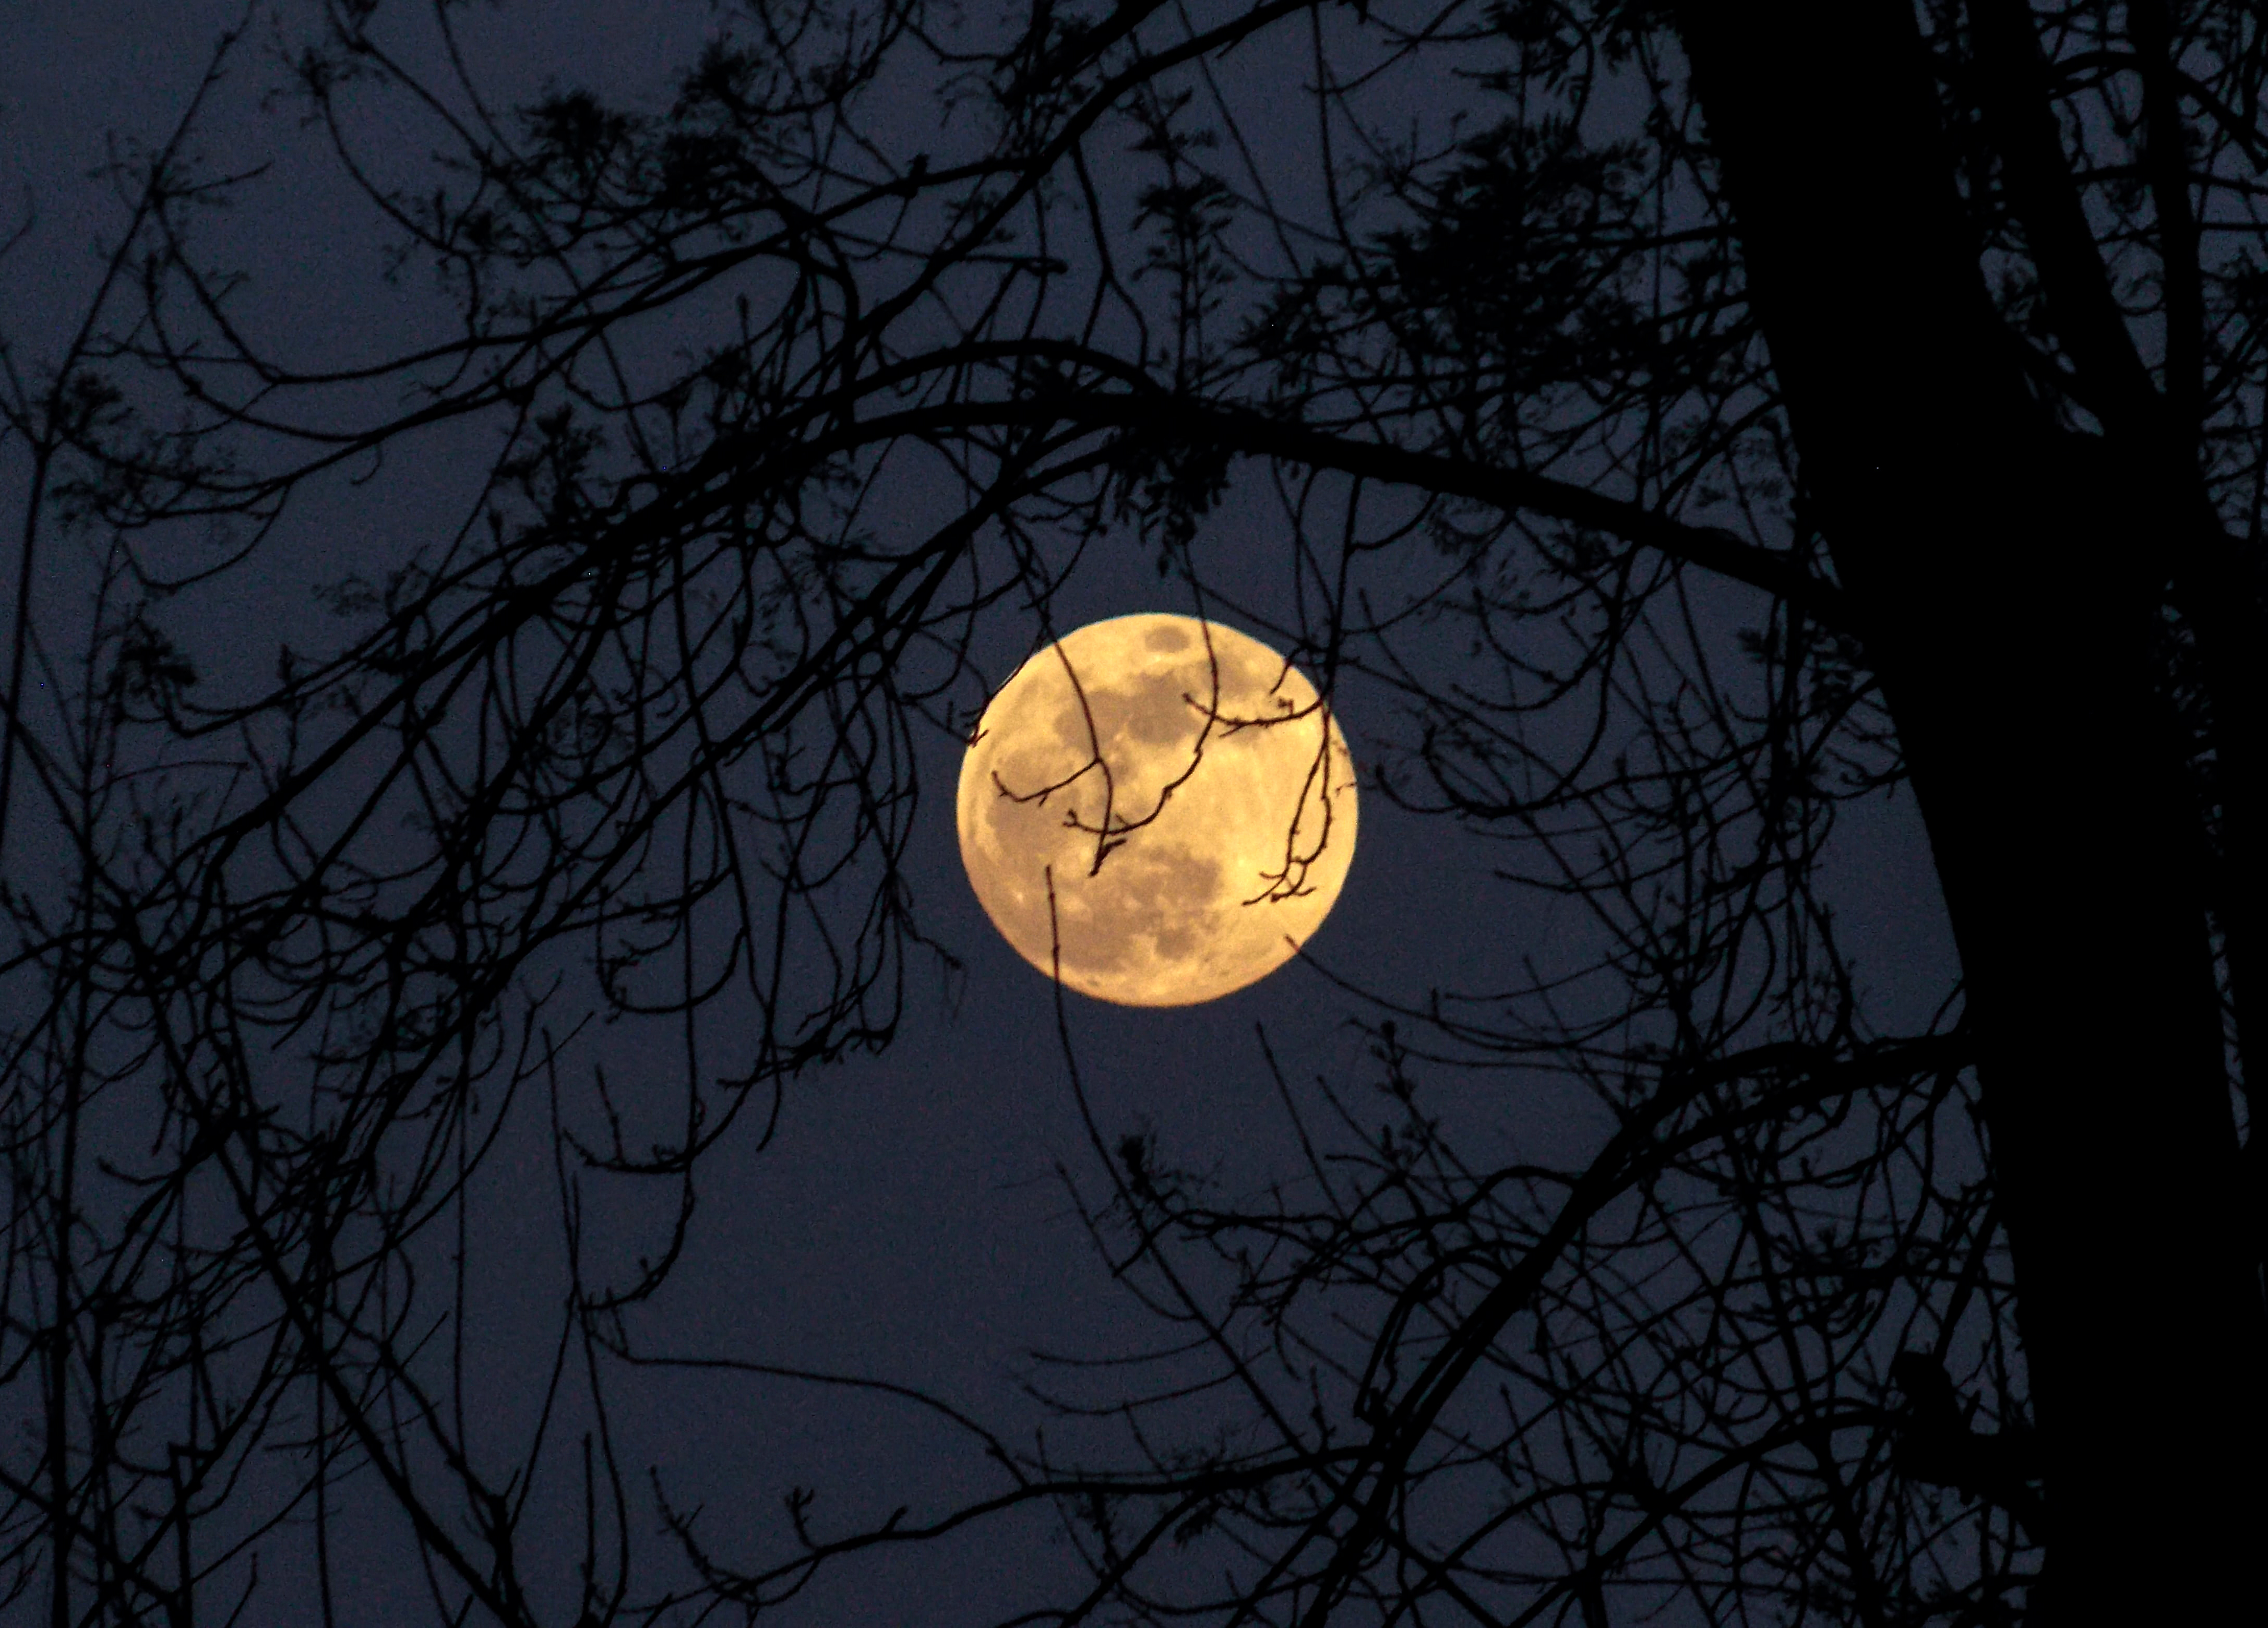 Full moon seen behind a tree at night